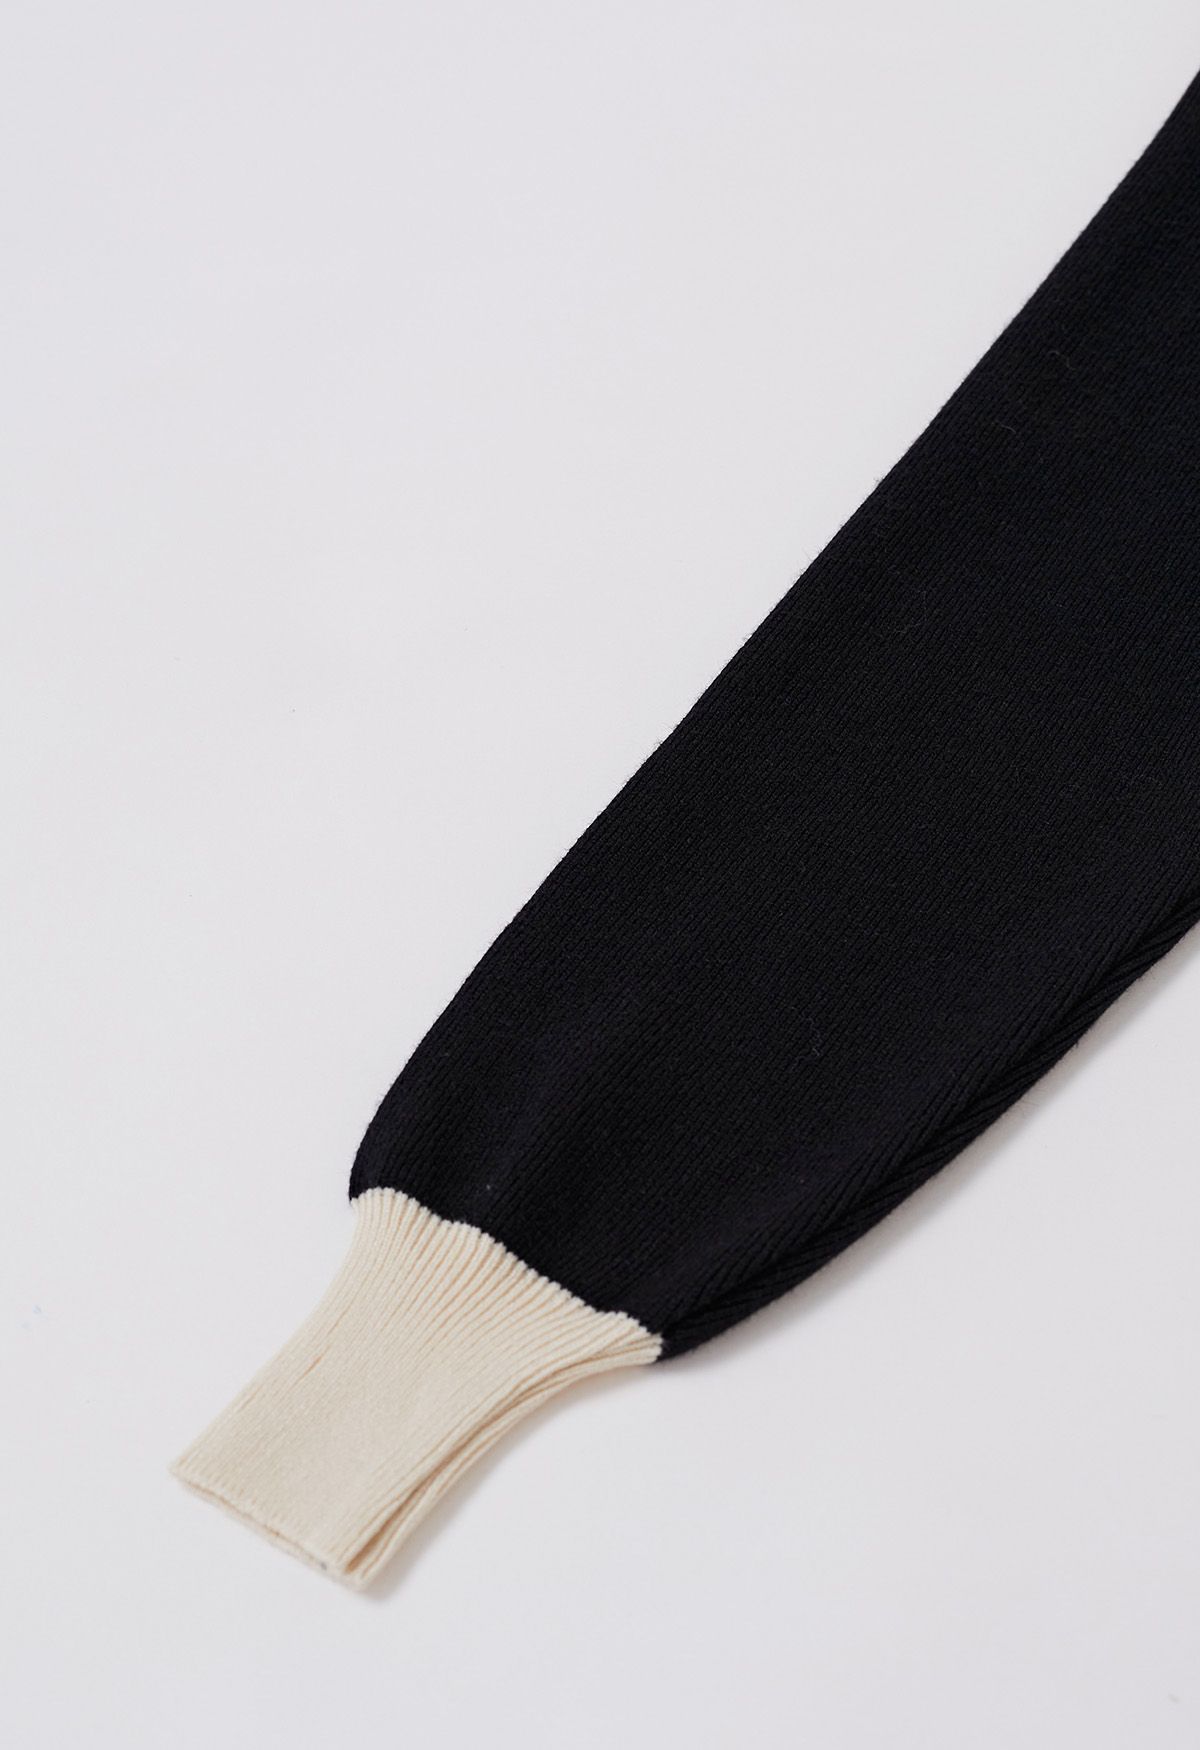 Contrast Edge Polo Knit Dress in Black